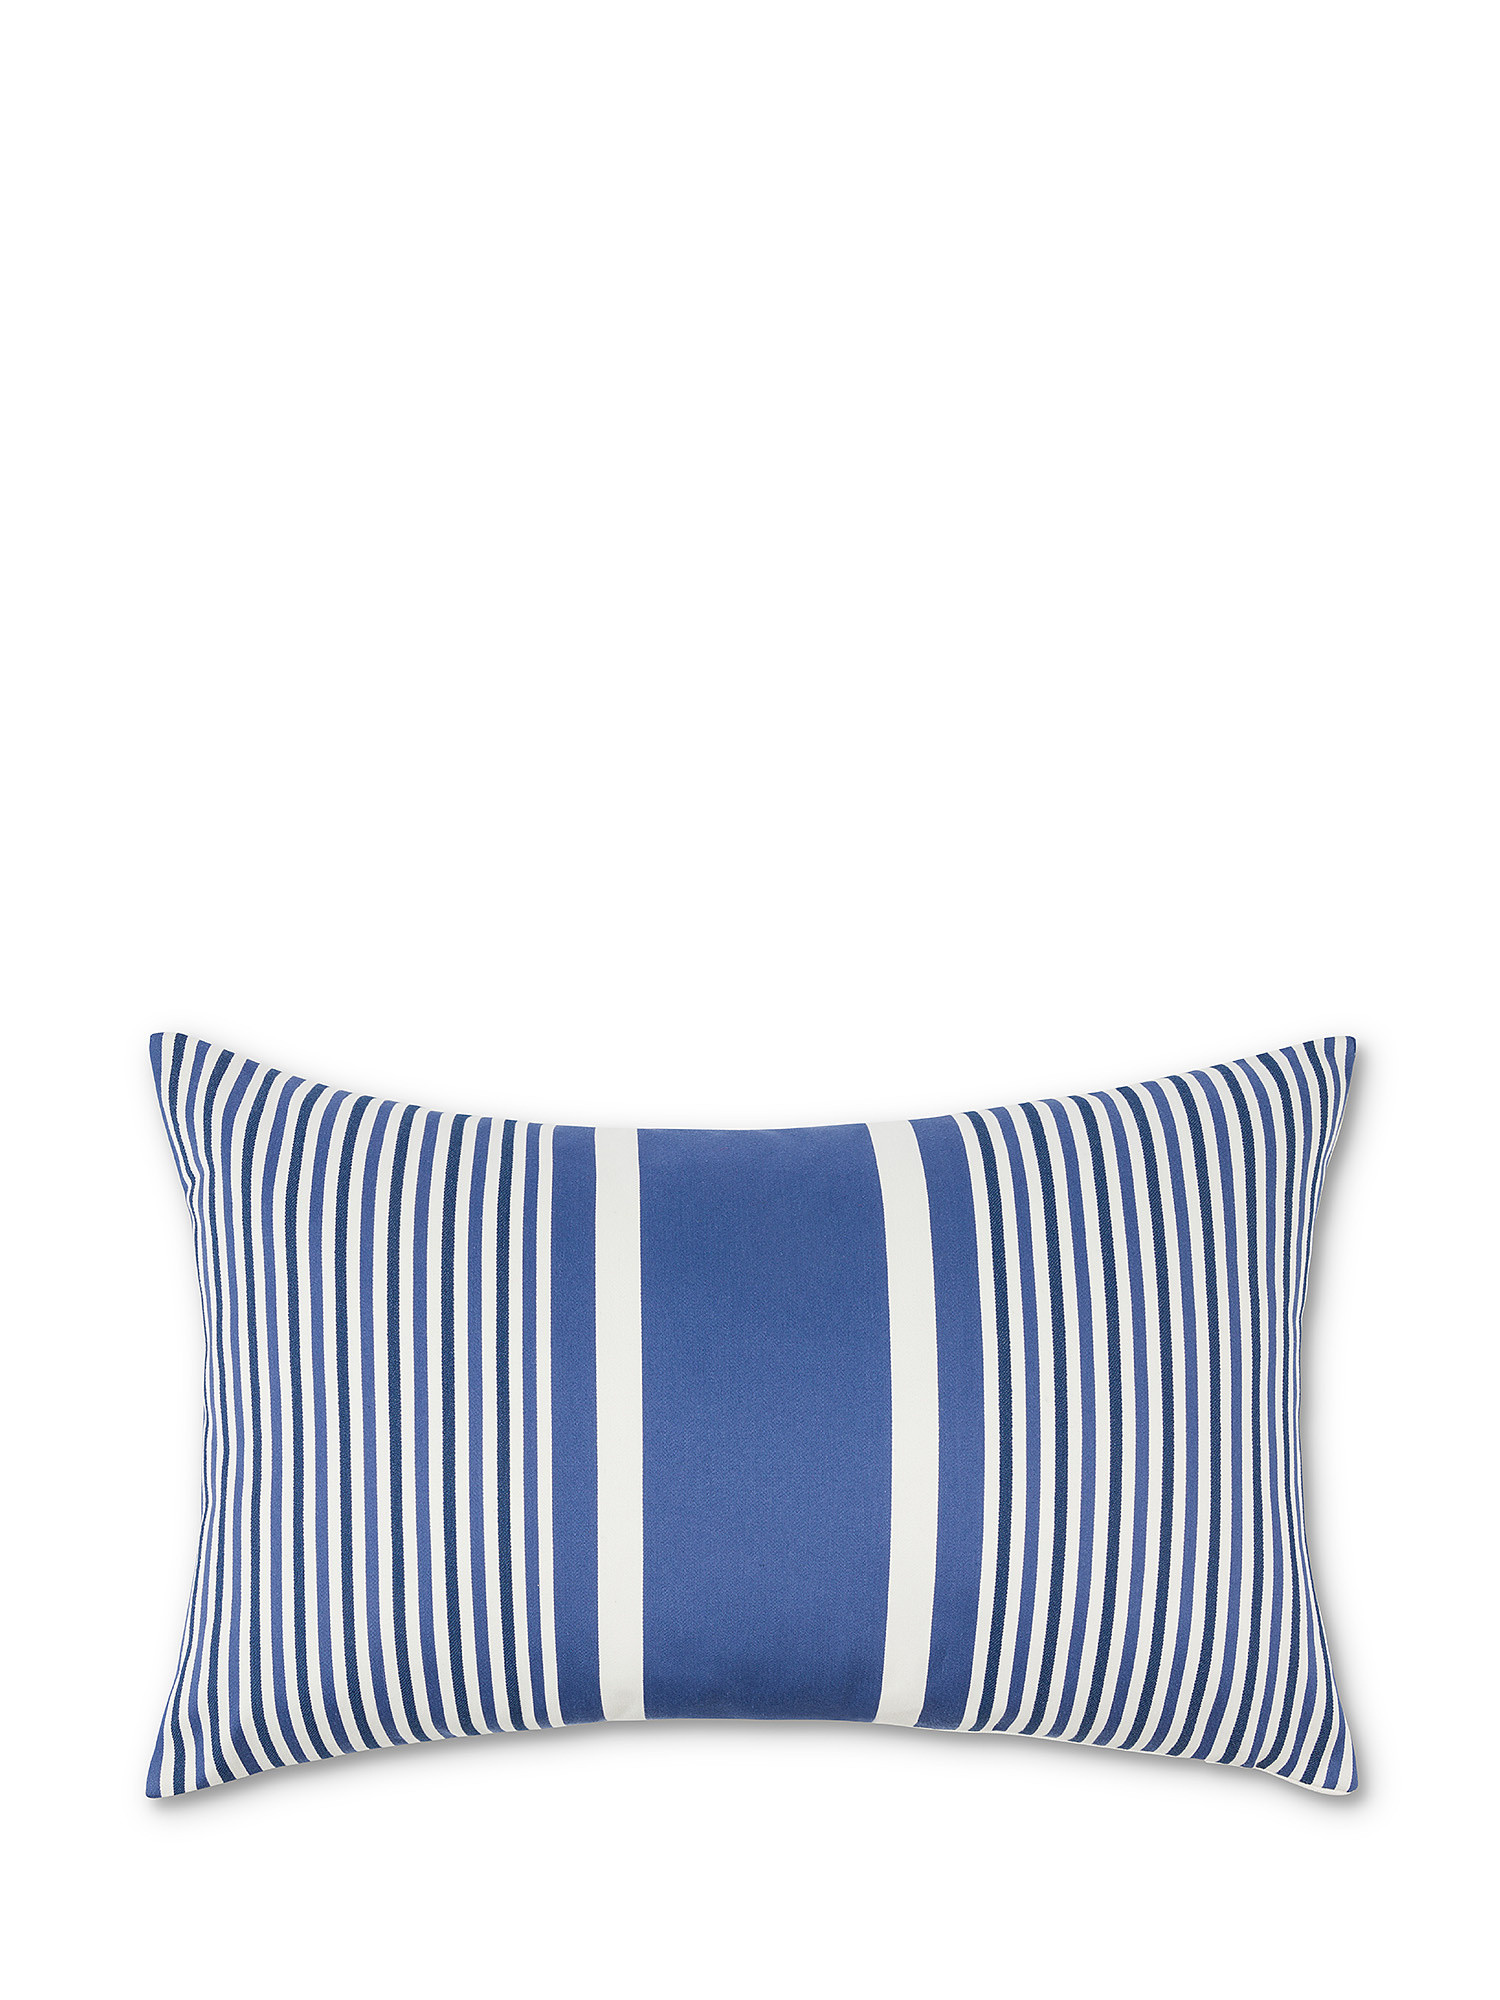 Multi-lined fabric cushion 35x55cm, Blue, large image number 0